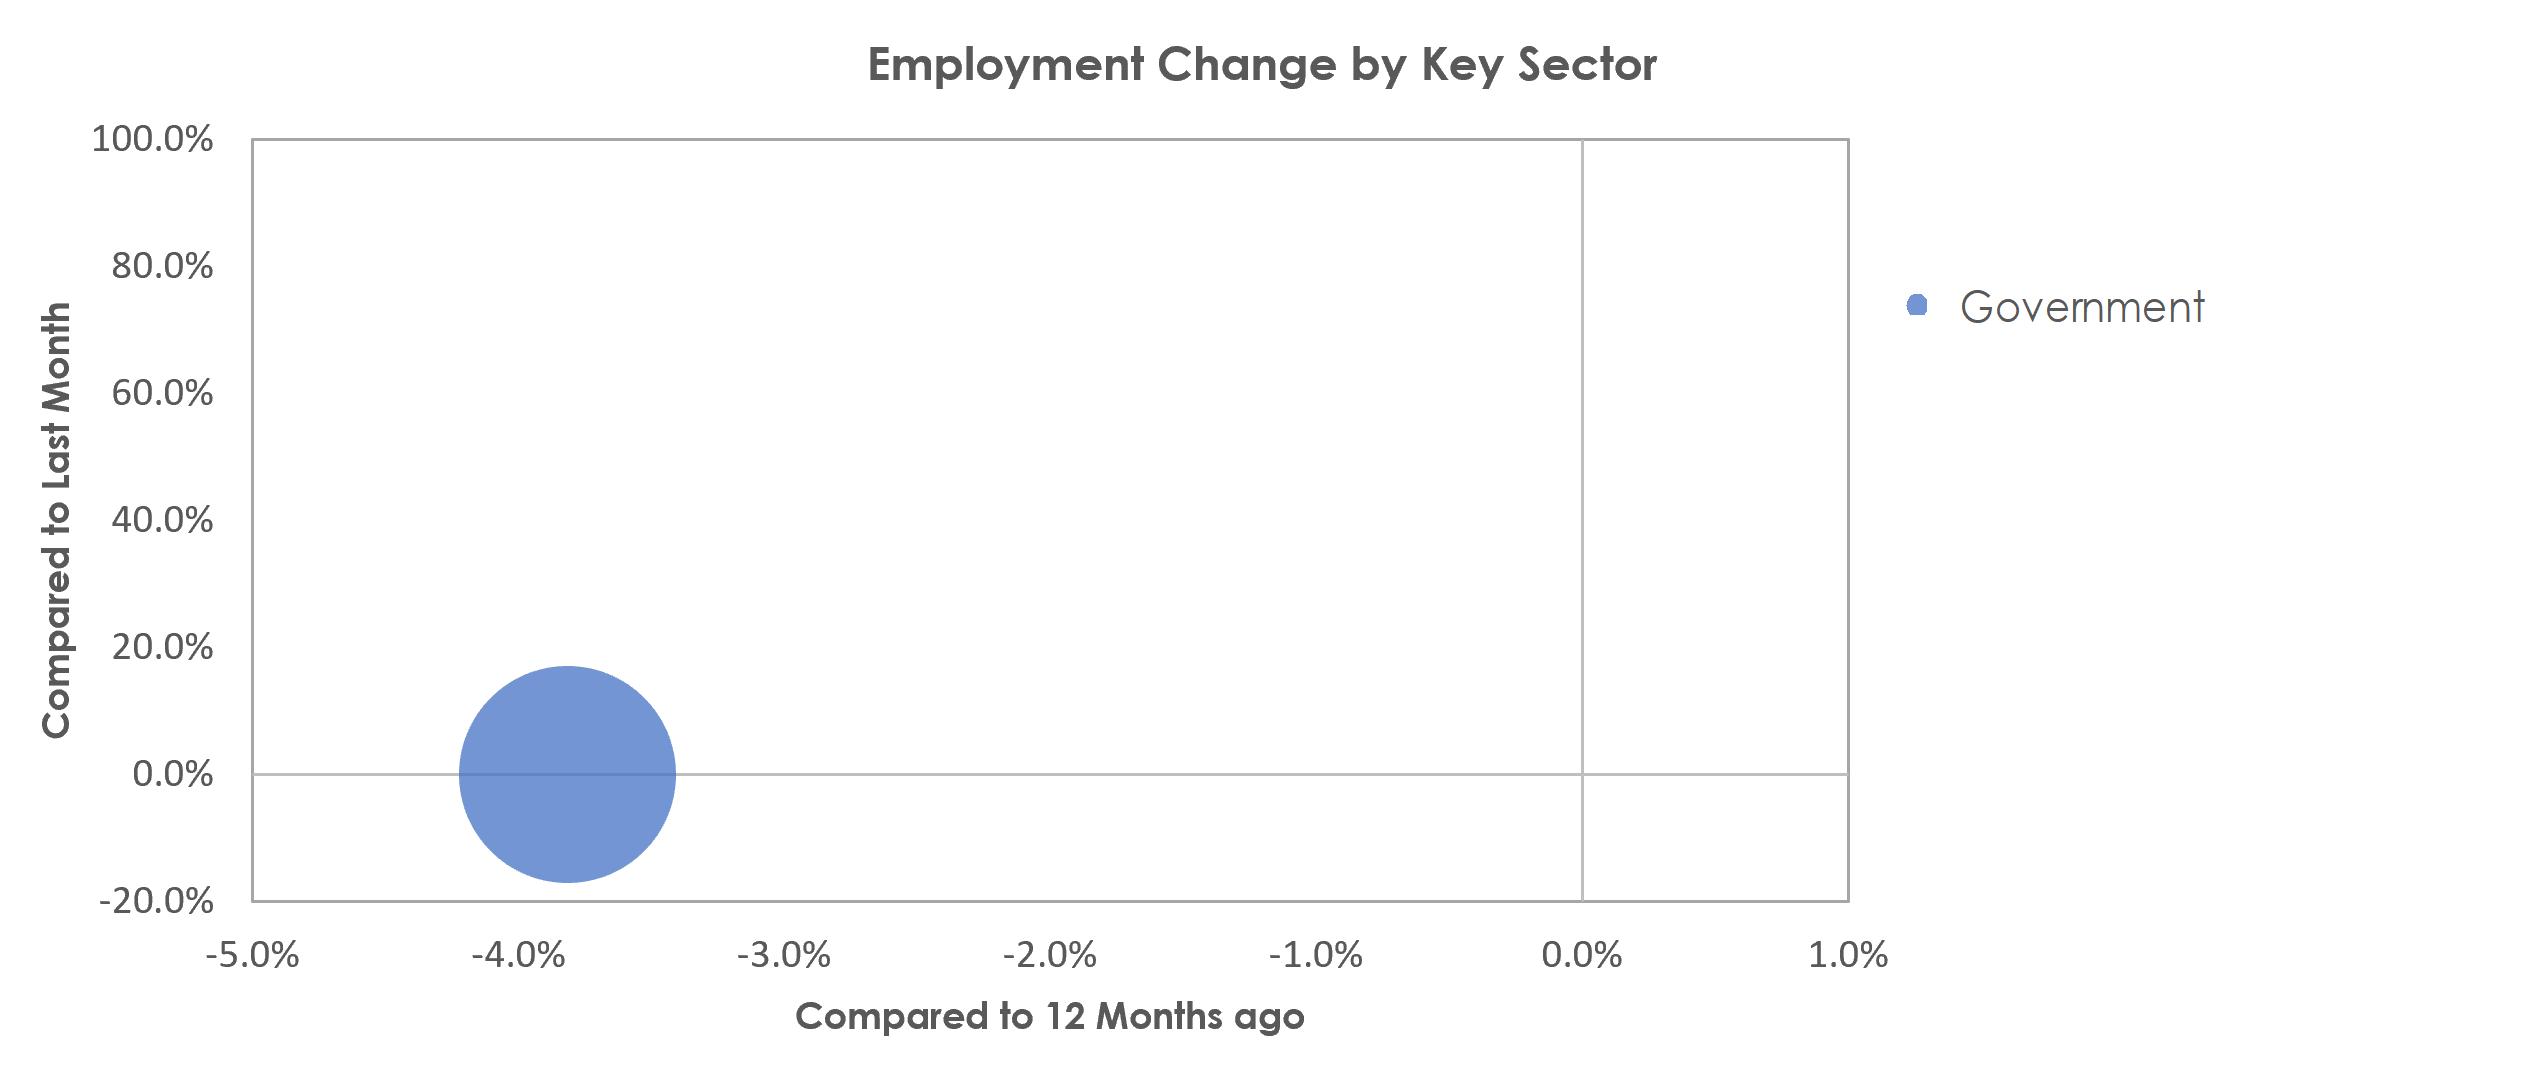 Blacksburg-Christiansburg-Radford, VA Unemployment by Industry March 2021